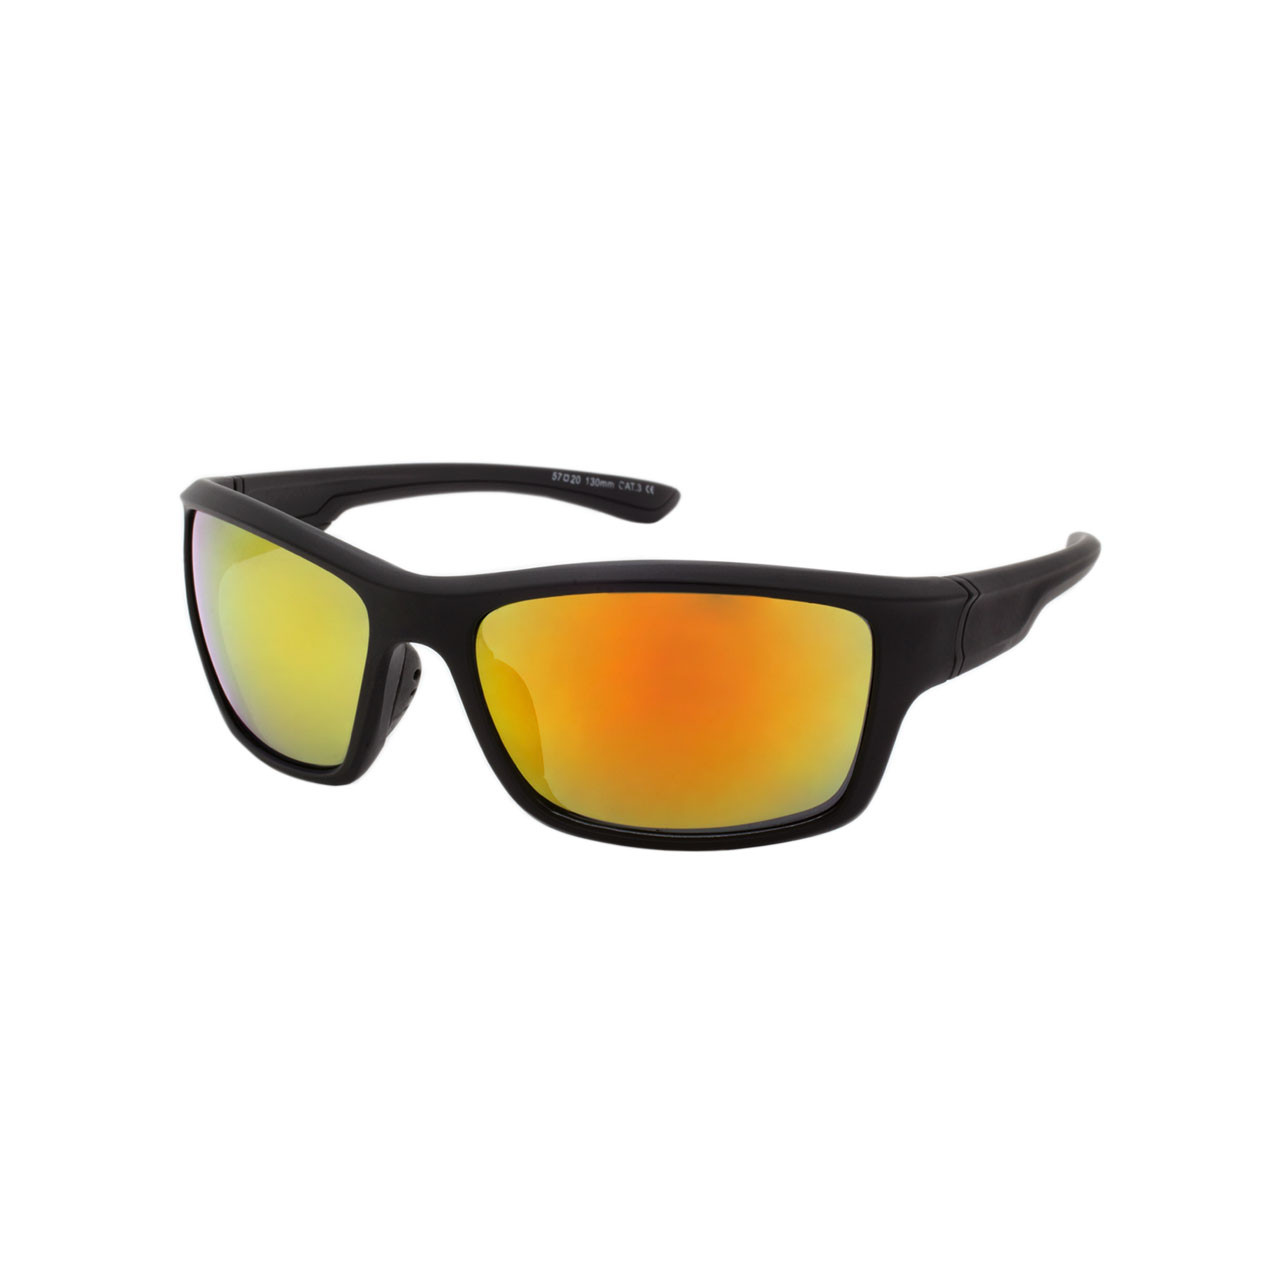 MENS SPORT SUNGLASSES WHOLESALE I ASST. 12 PCS I NS06ST - Shark Eyes, Inc.  - Wholesale Sunglasses, Reading Glasses, & Displays